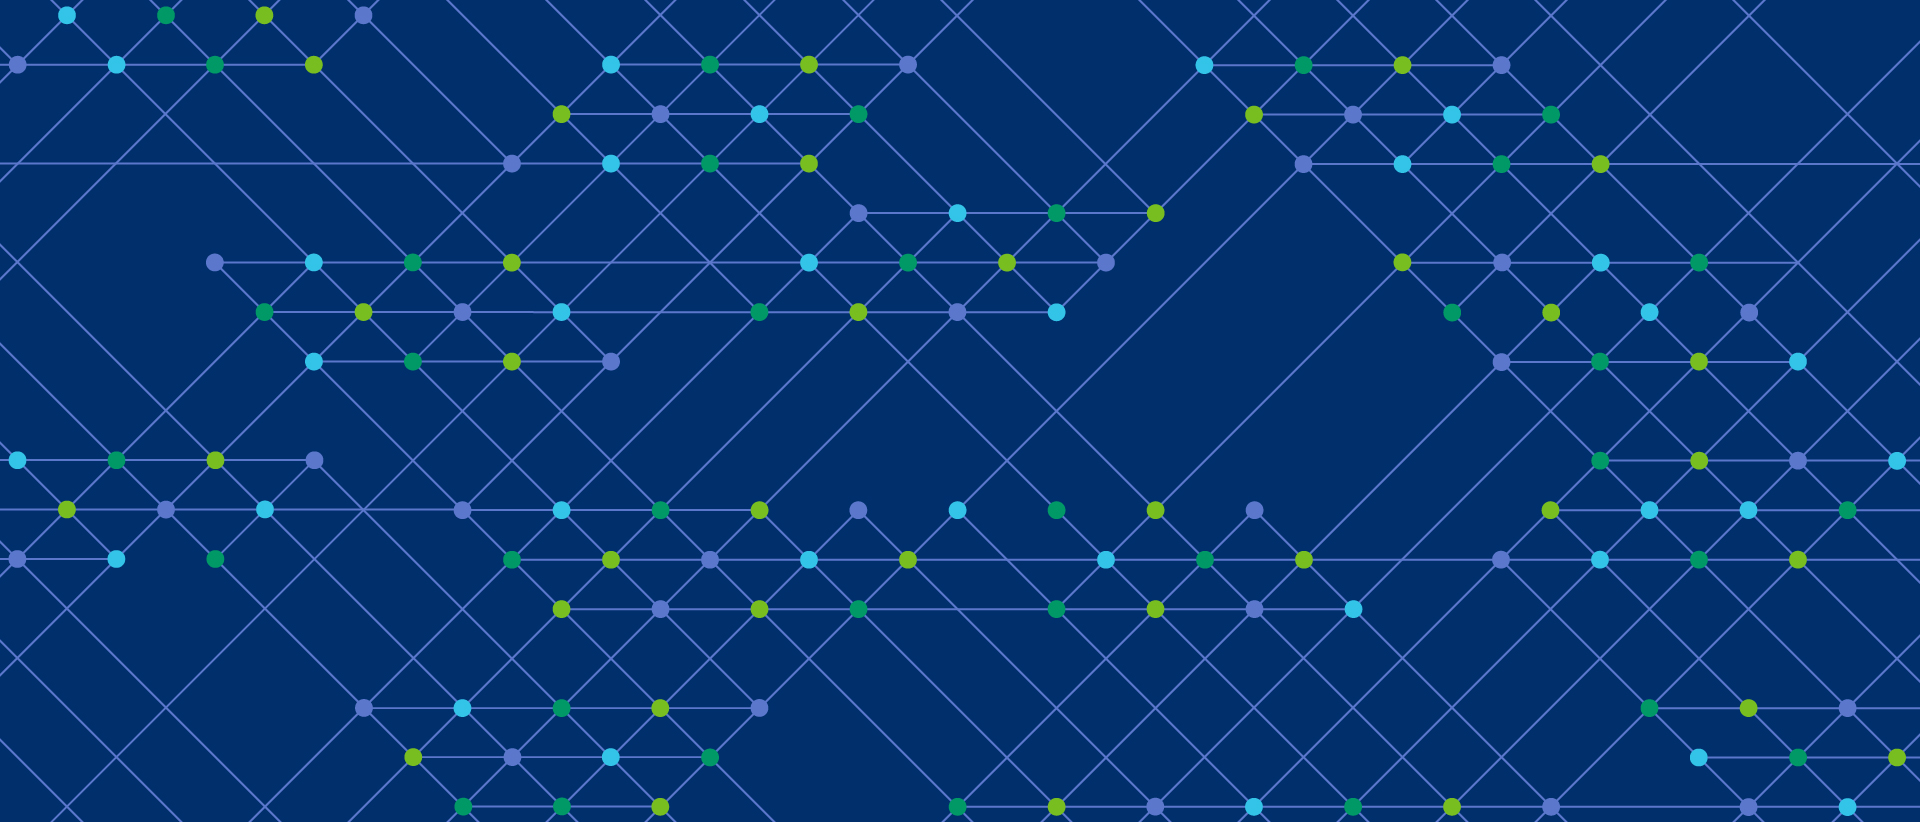 Network pattern [image]